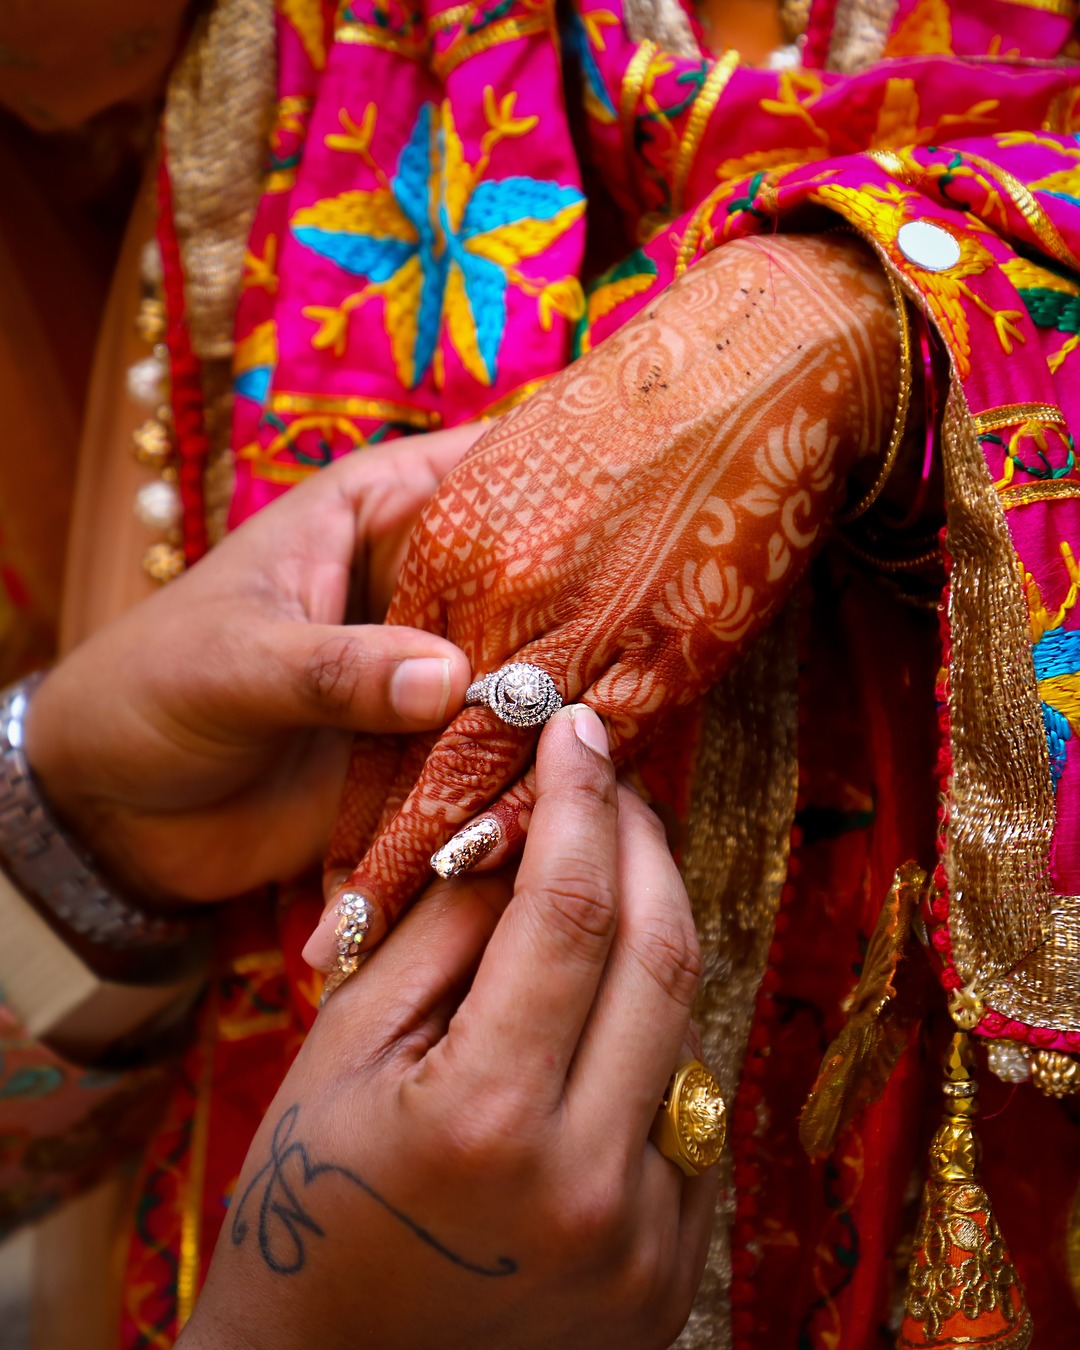 Indian wedding nails glitter